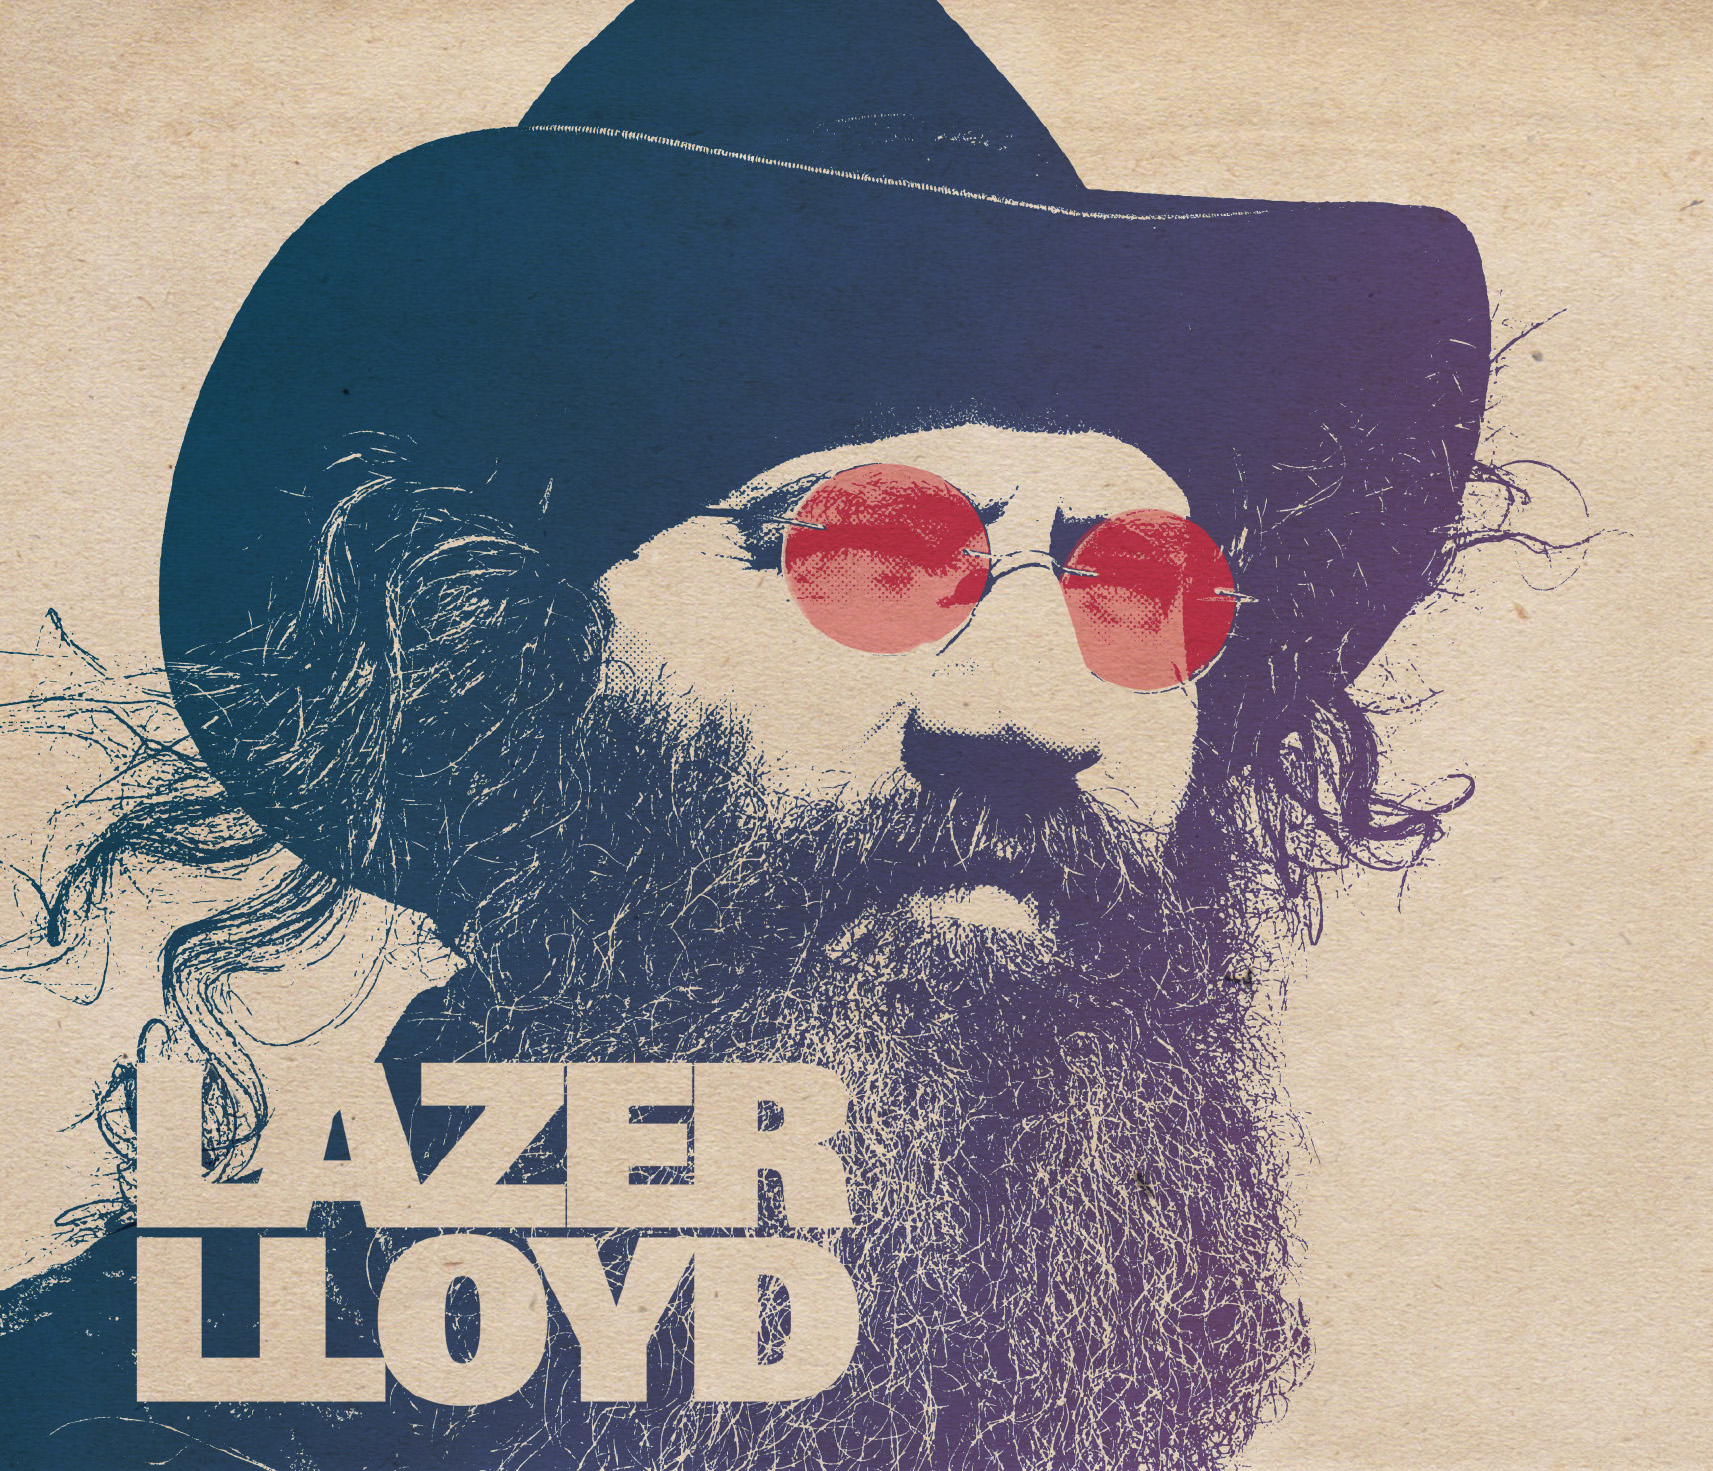  REVIEWS HERE  http://www.lotsofloverecords.com   CHARTS (12 weeks on the RMR Blues chart, 5 weeks in the top ten)  #3 &nbsp;&nbsp; Lazer Lloyd - RMR Blues/Rock Top 200 CD's of 2015 #4 &nbsp;&nbsp; Lazer Lloyd - RMR Blues Peak Position #2 &nbsp;&nbsp